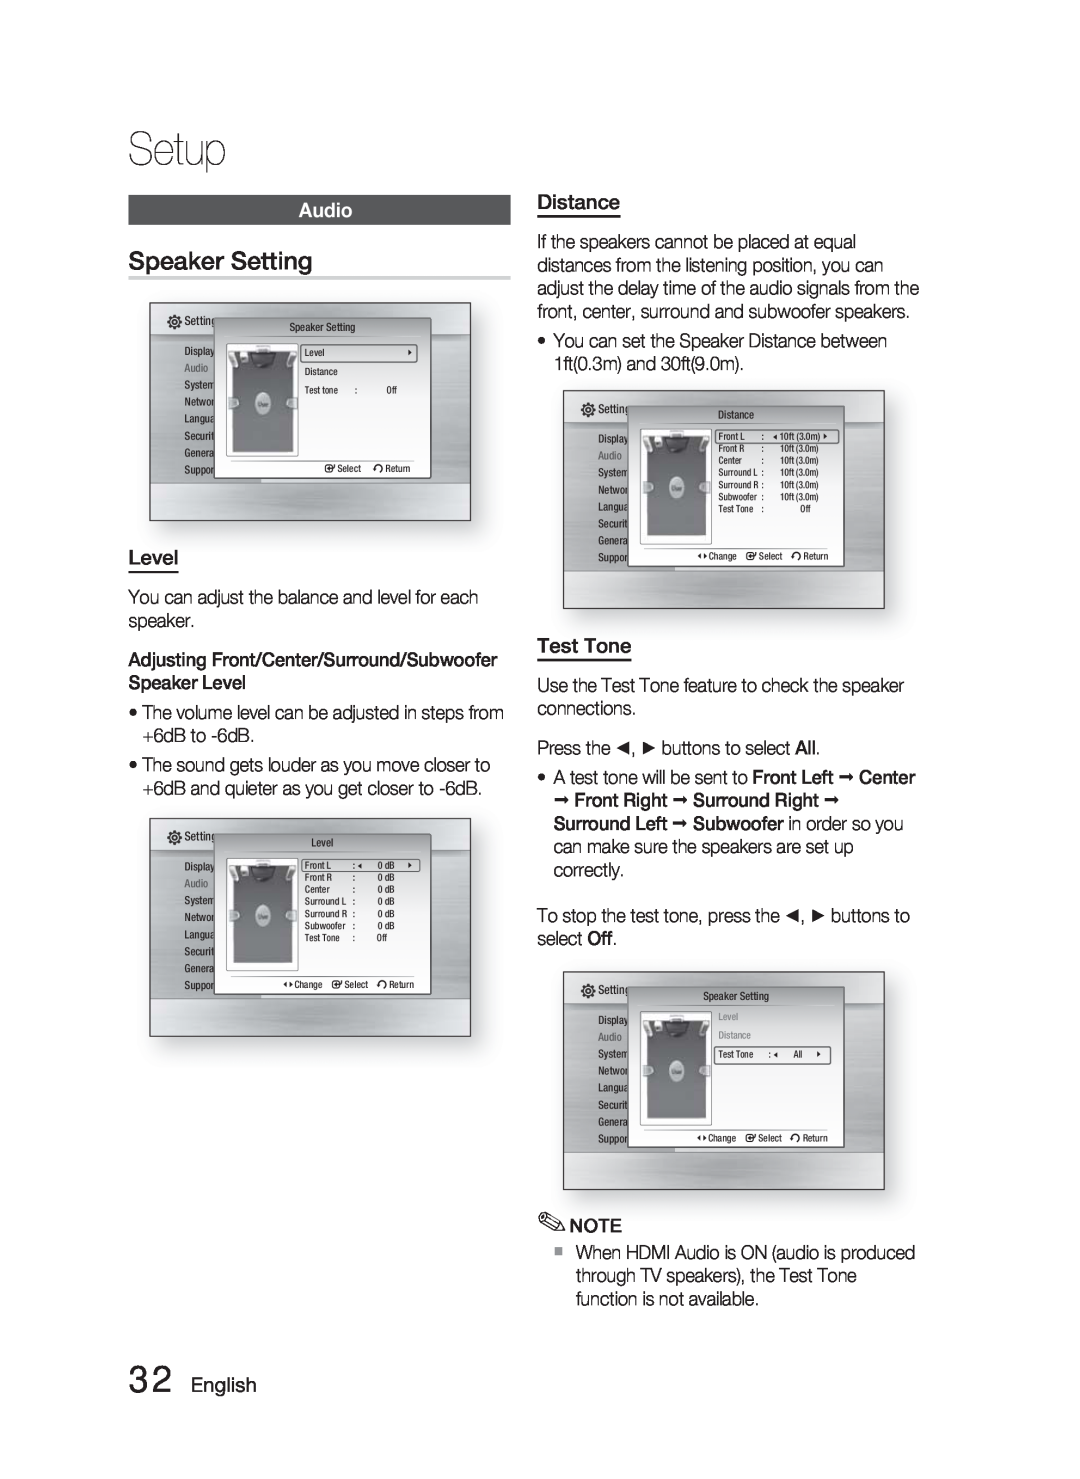 Samsung HT-C5500 user manual Speaker Setting, Audio, Level, Distance, Test Tone, English, Setup 